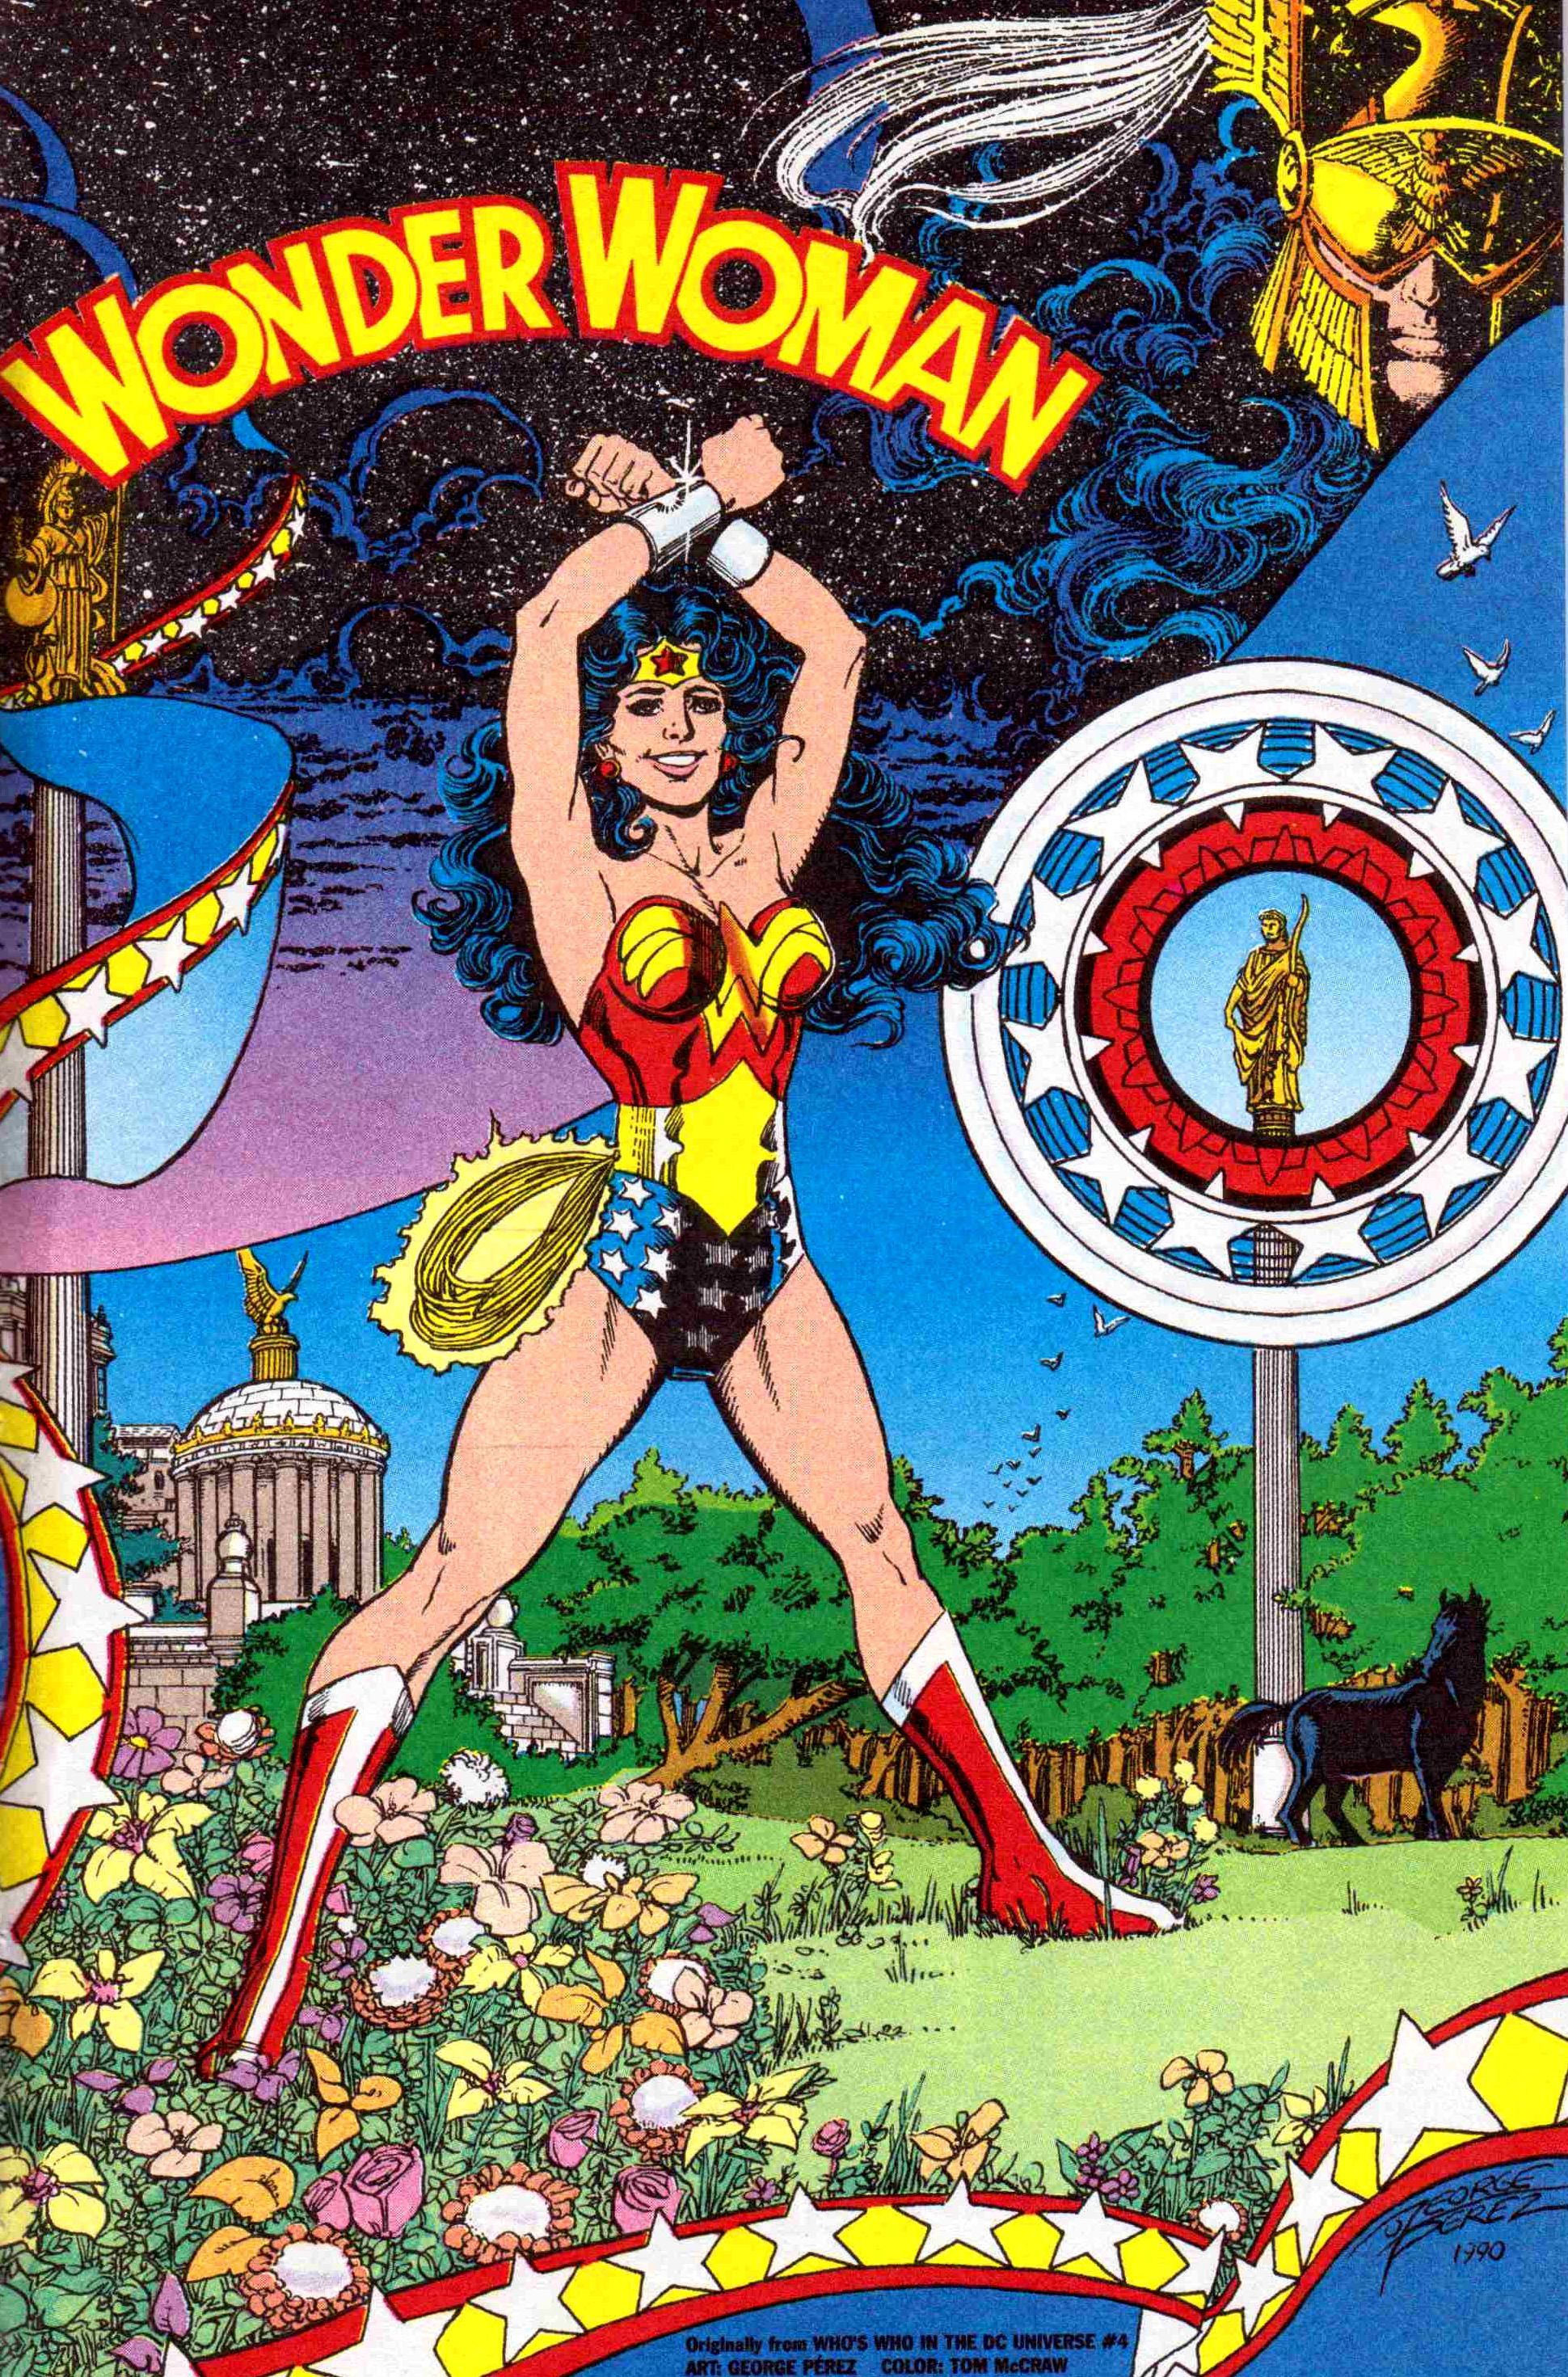 Which comic book artist draws Wonder Woman better: George Pérez or José